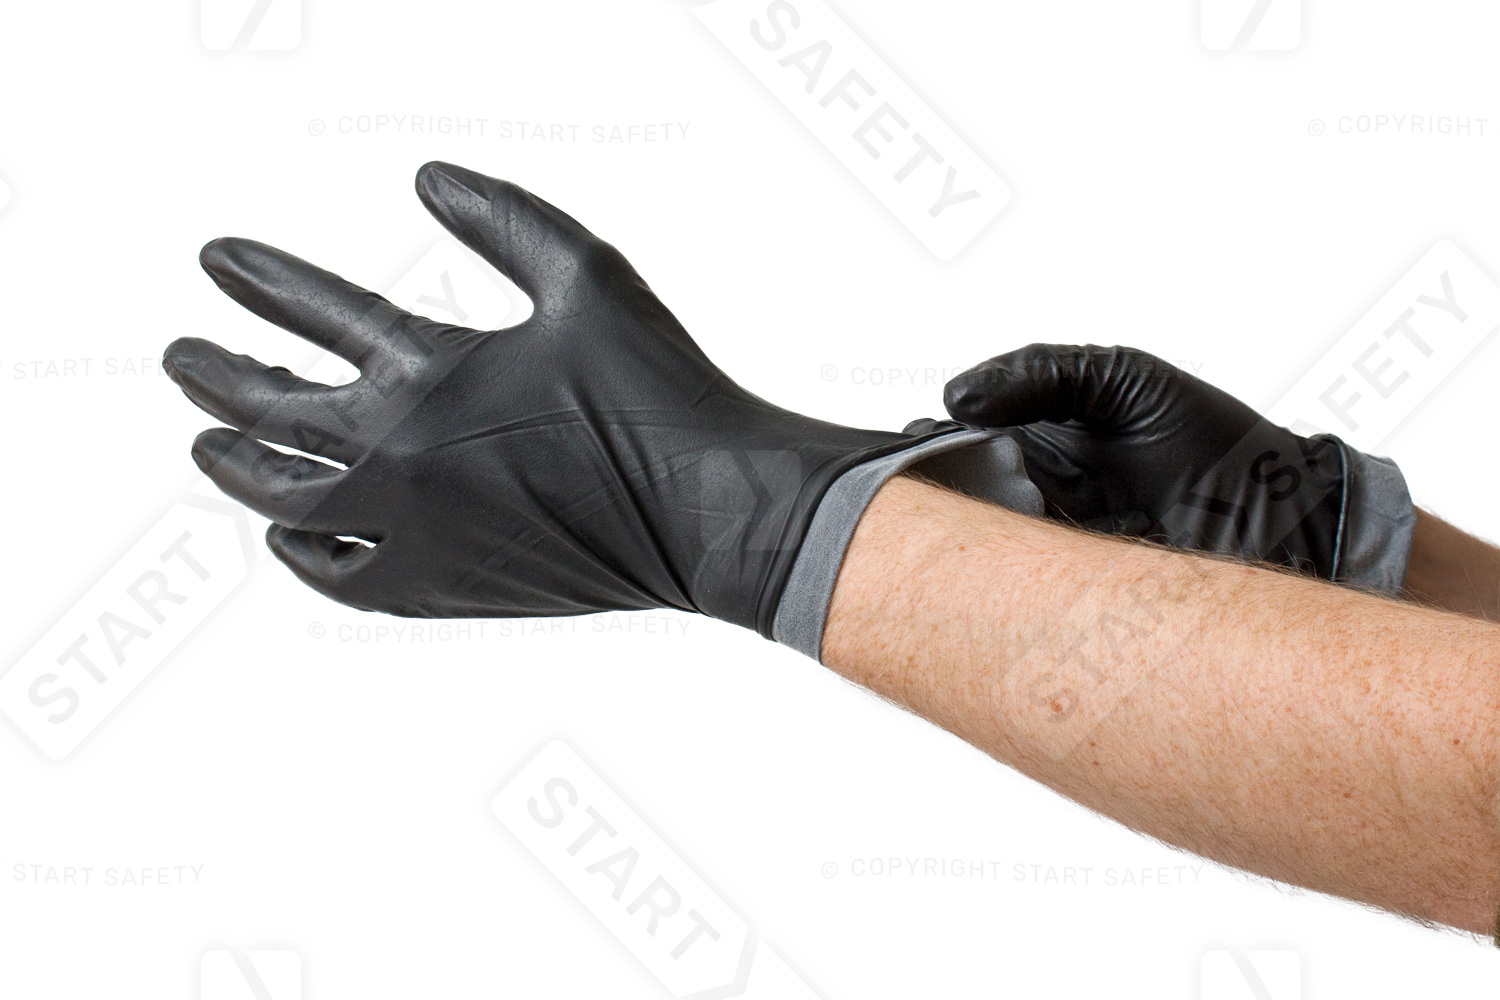 MegaMan gloves being put on